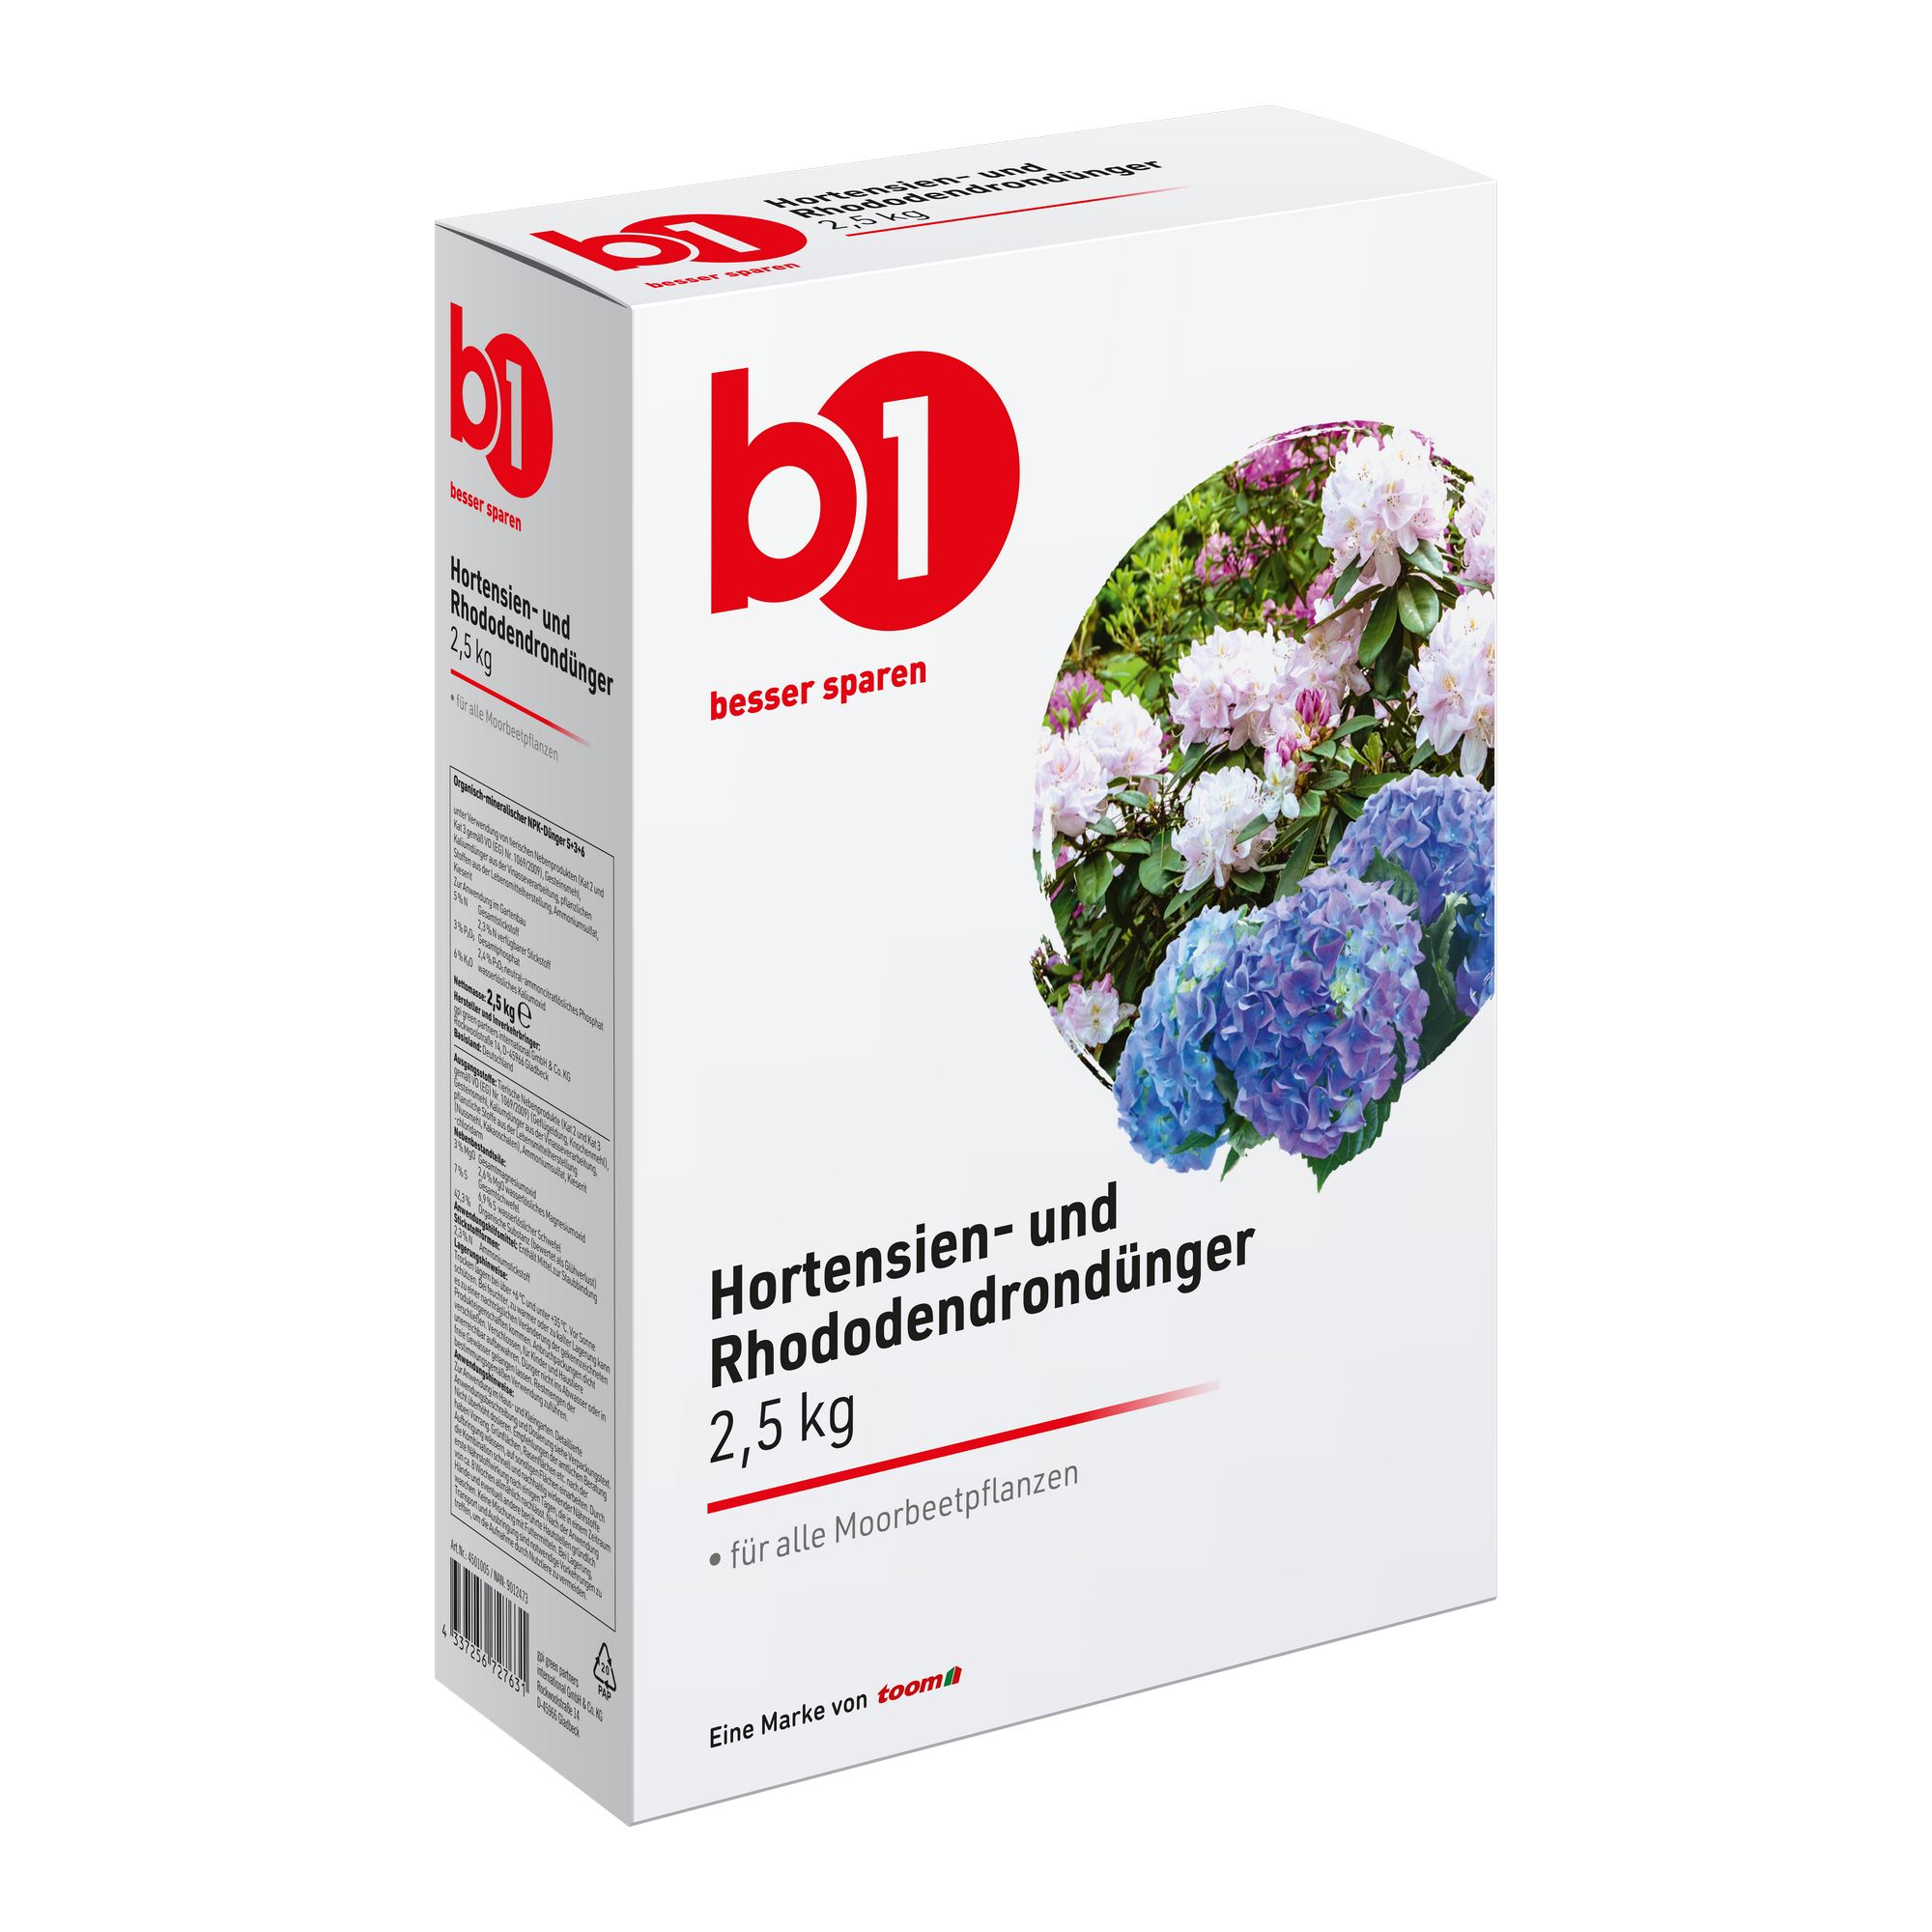 Hortensien- und Rhododendrondünger 2,5 kg + product picture